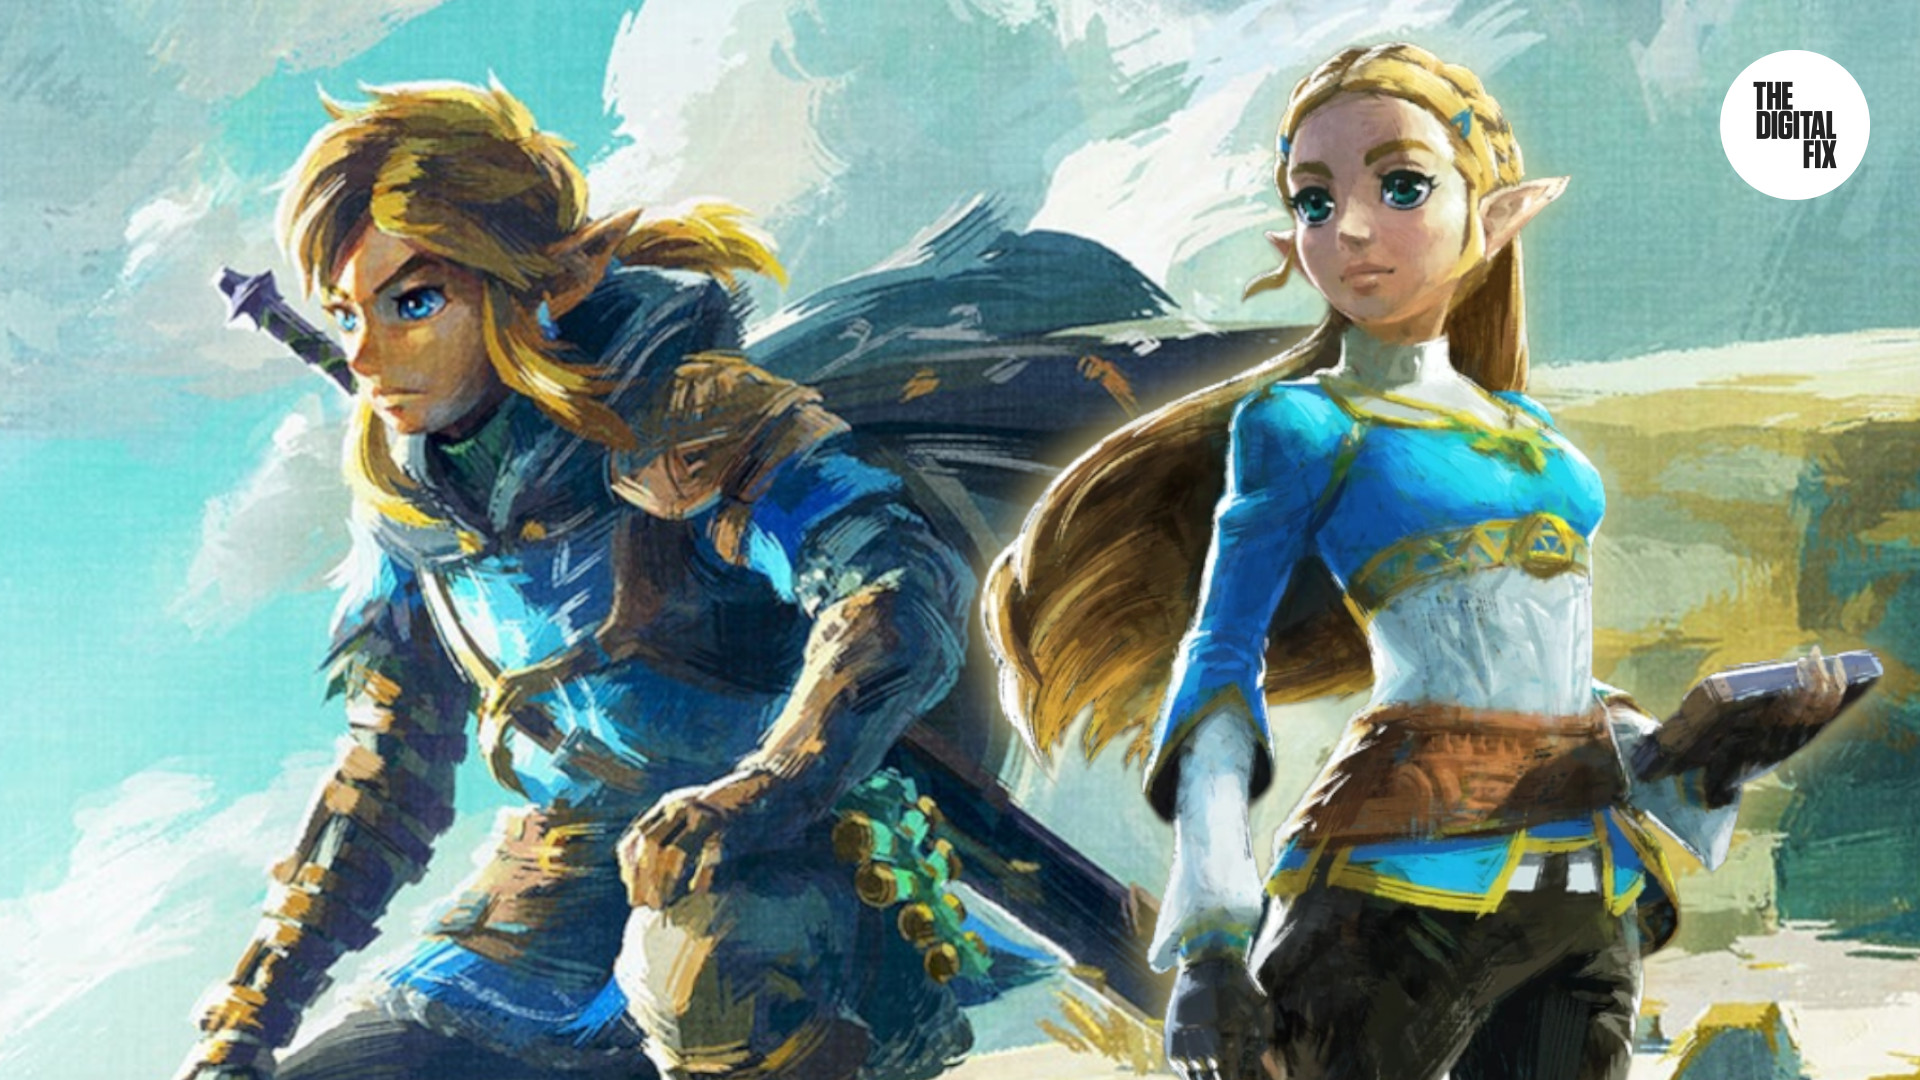 Legend of Zelda movie release date speculation, cast, plot, and news